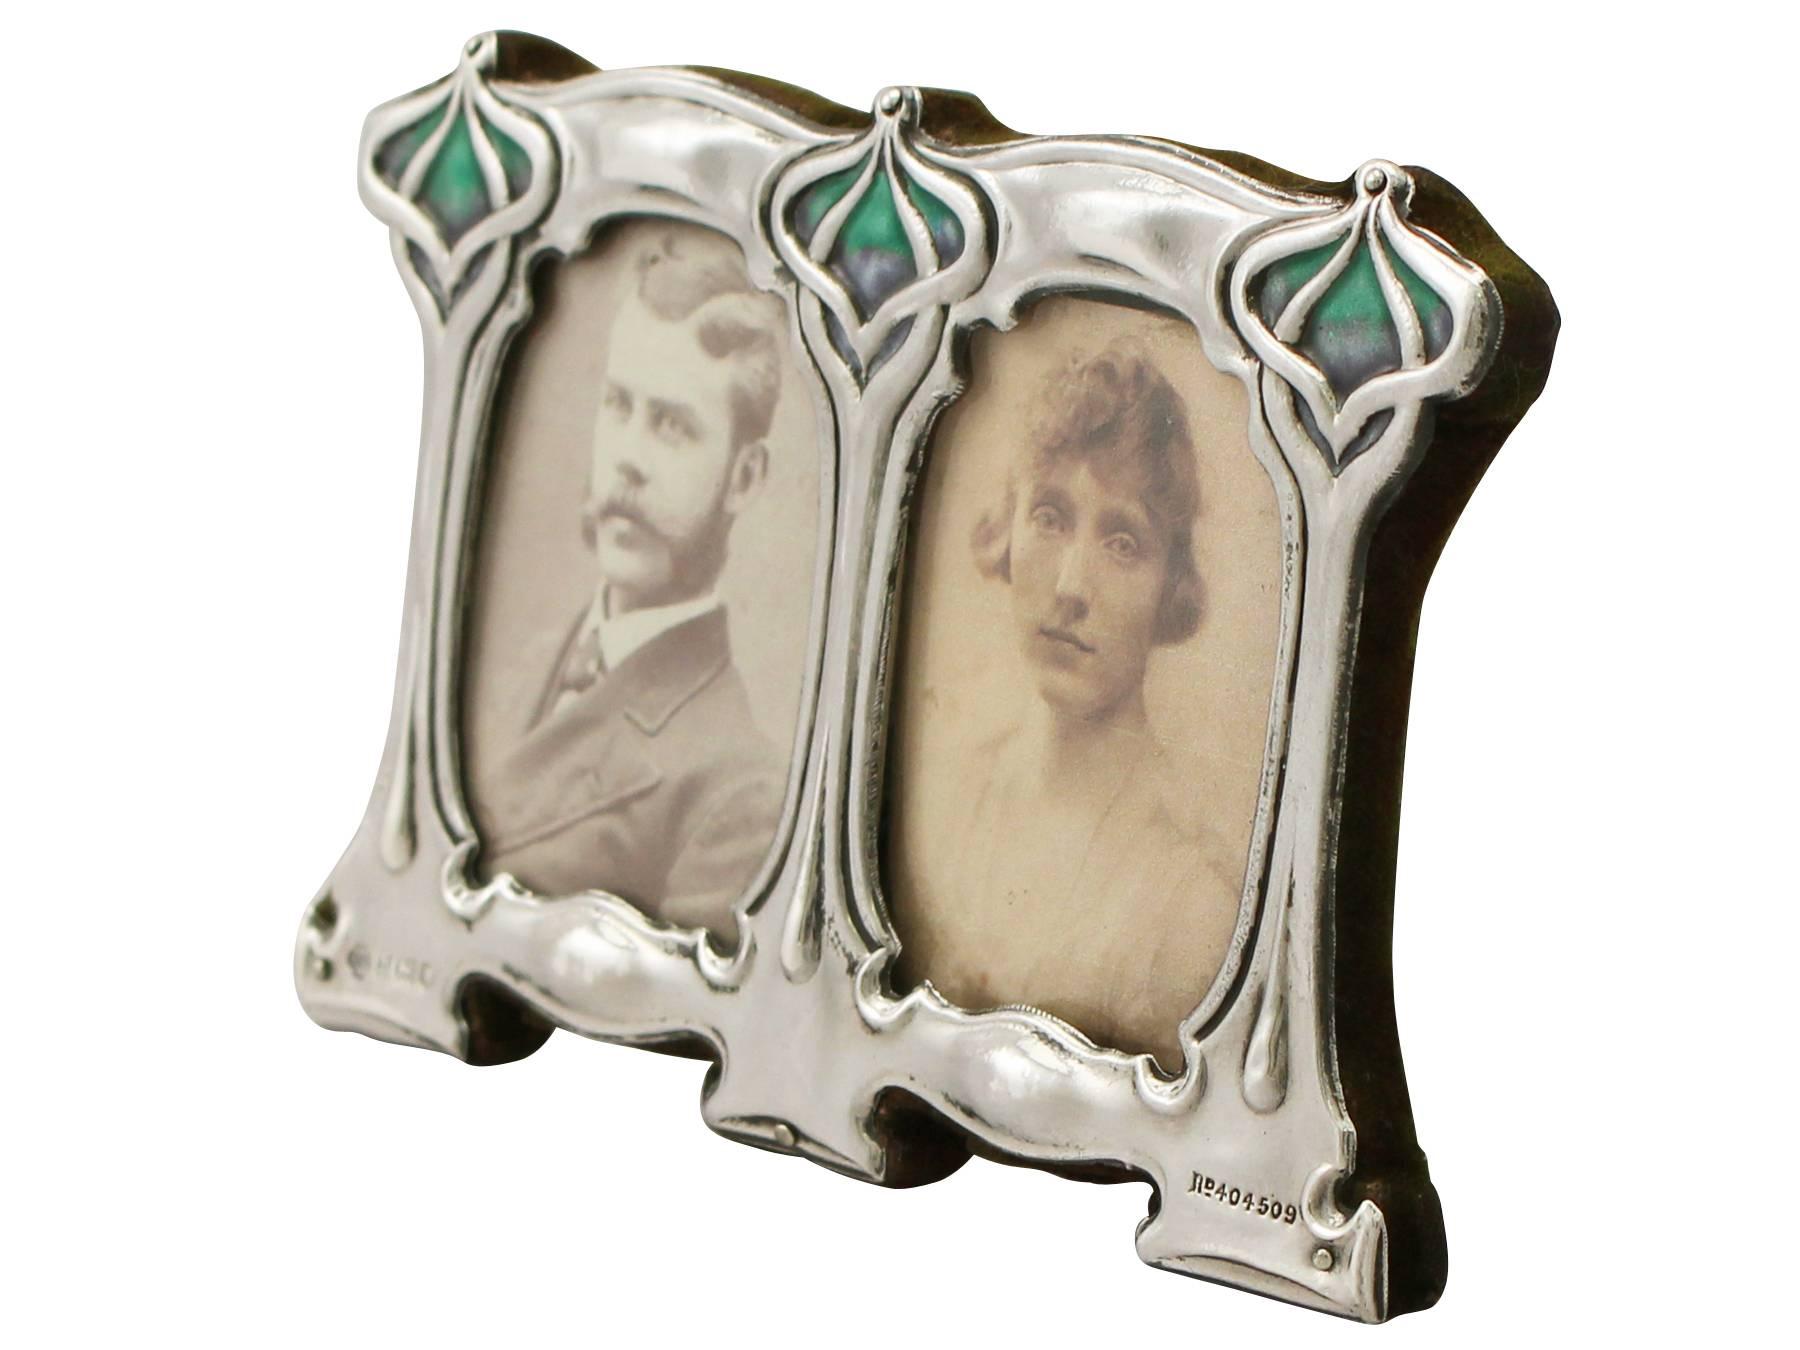 English Edwardian Art Nouveau Enamel and Sterling Silver Double Photograph Frame